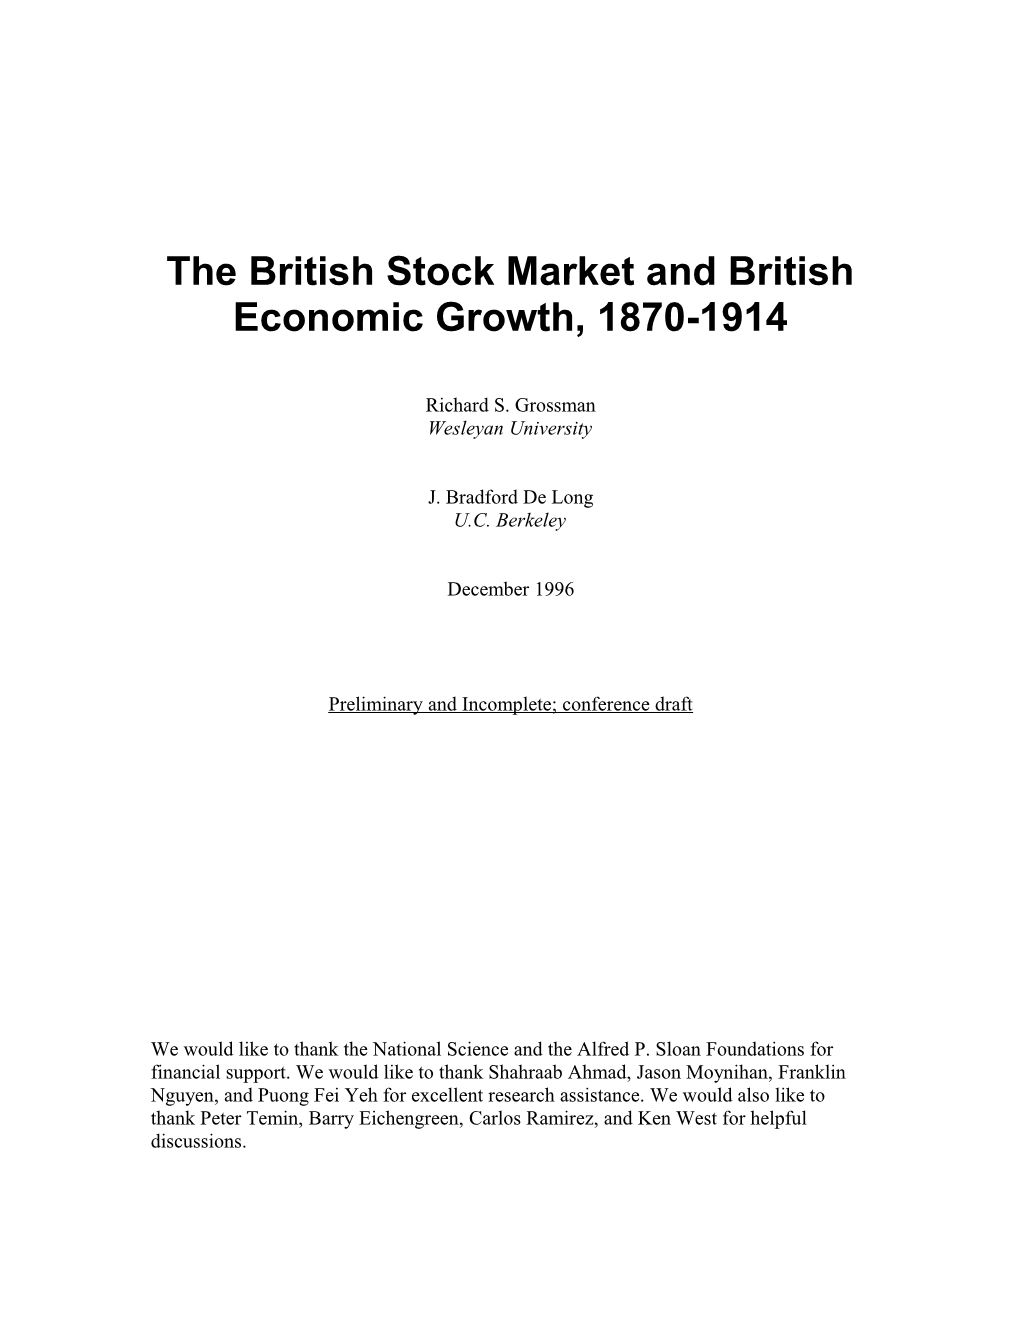 The British Stock Market and British Economic Growth, 1870-1914